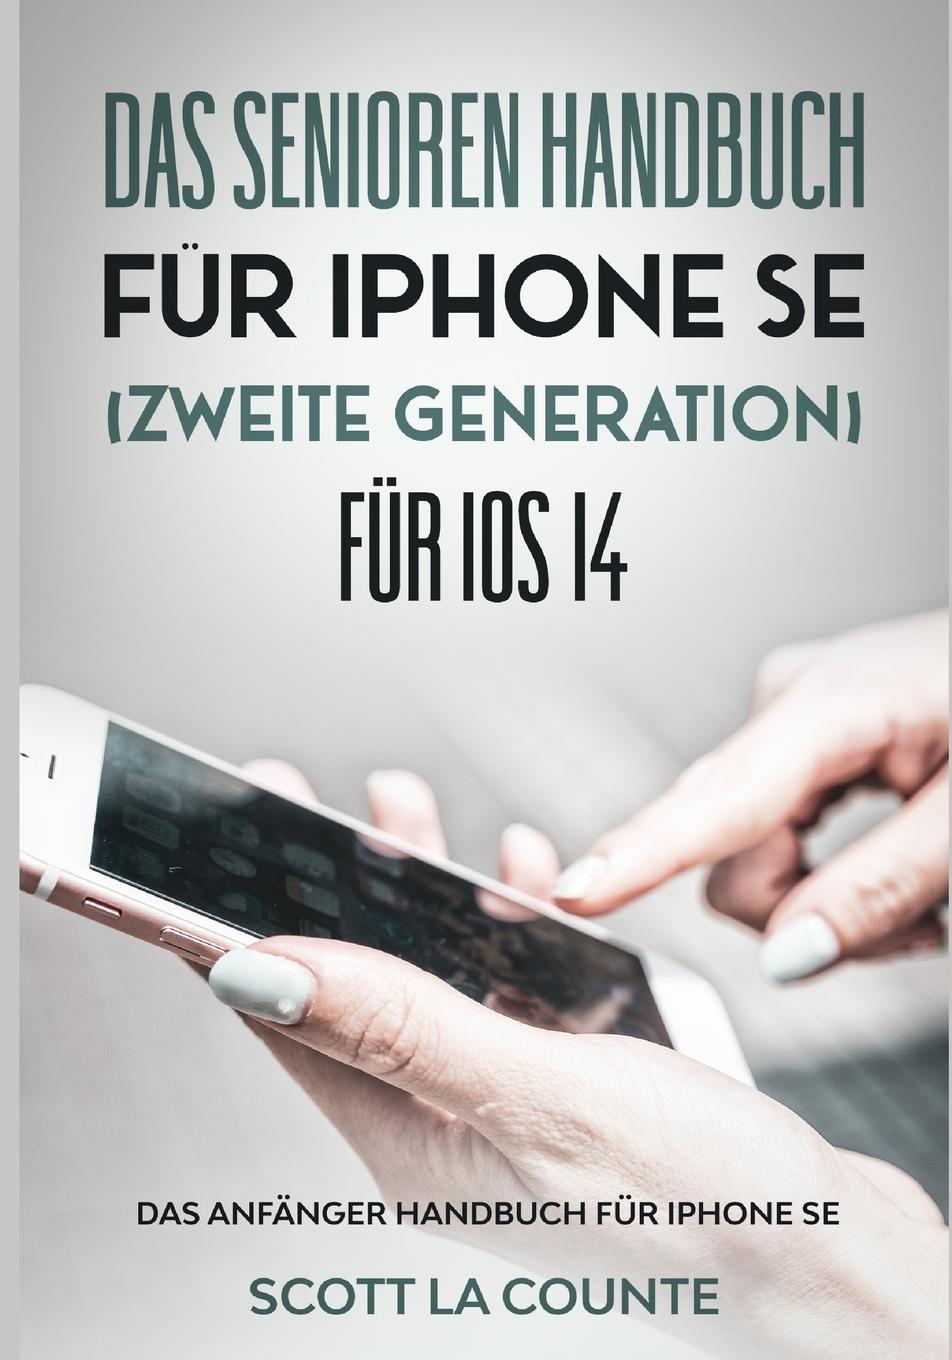 Книга Senioren handbuch fur Iphone SE (Zweite Generation) Fur IOS 14 